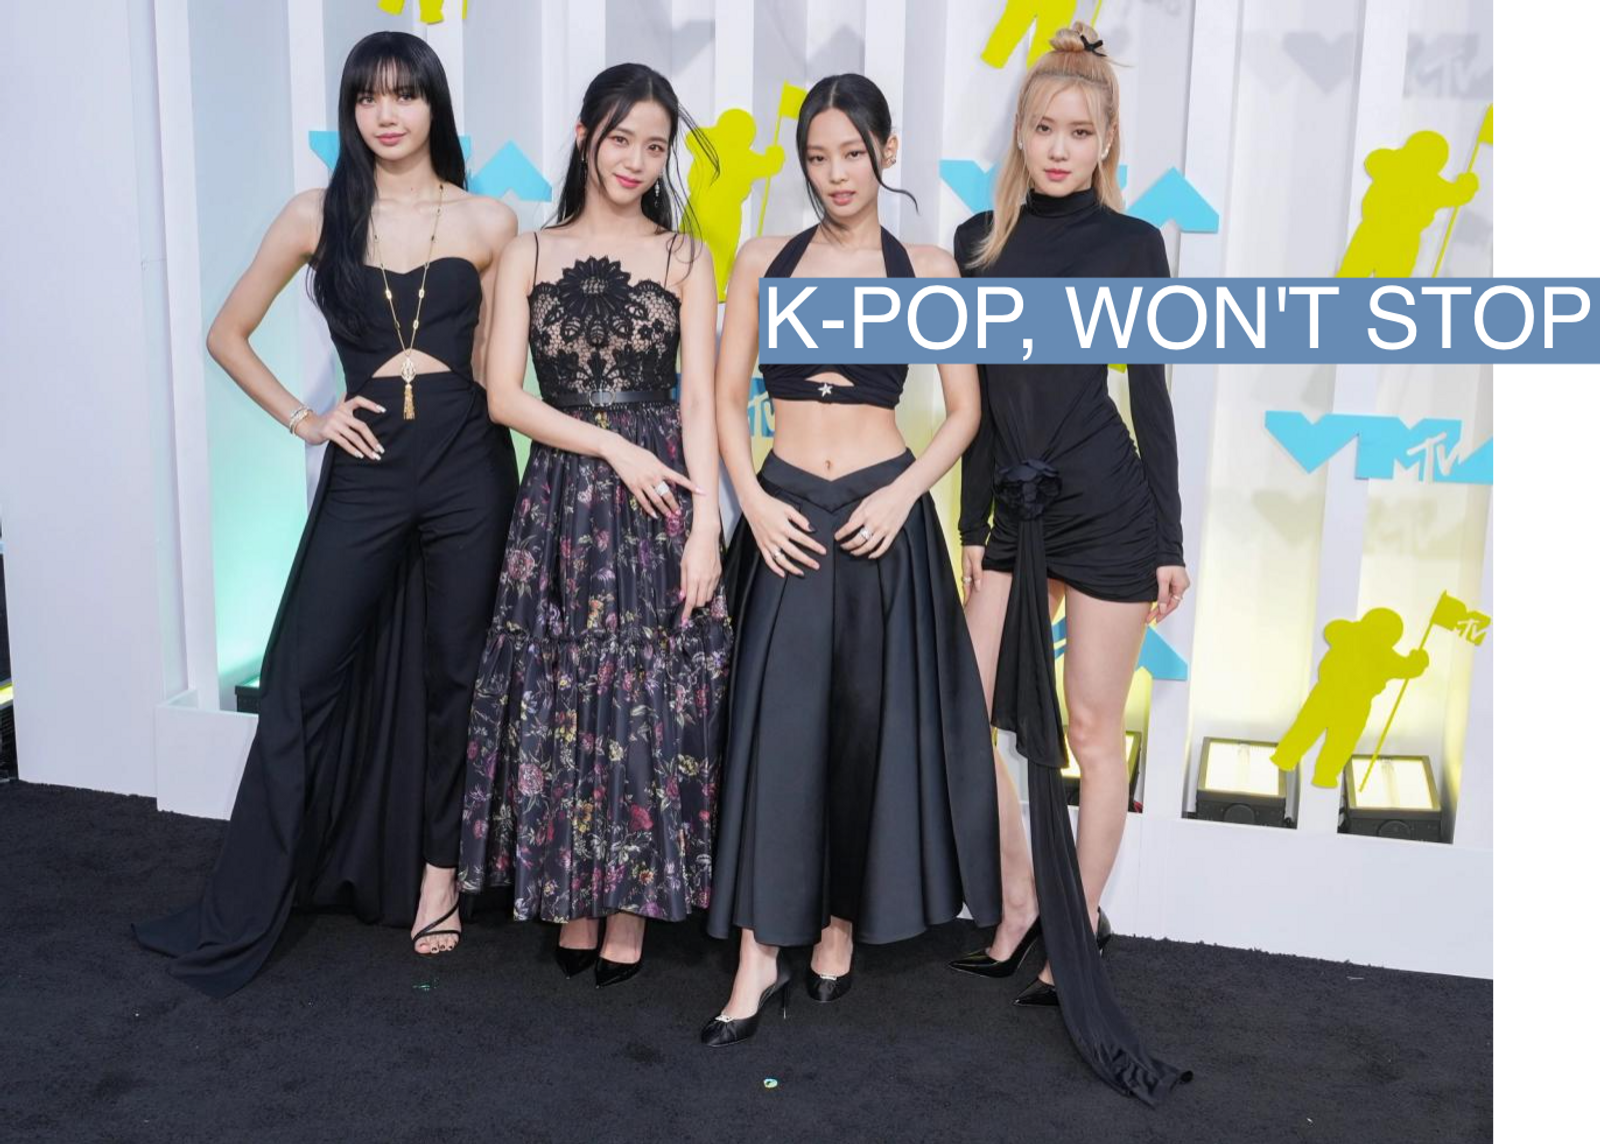 BLACKPINK : de stars de K-pop à icônes de la pop culture, retour